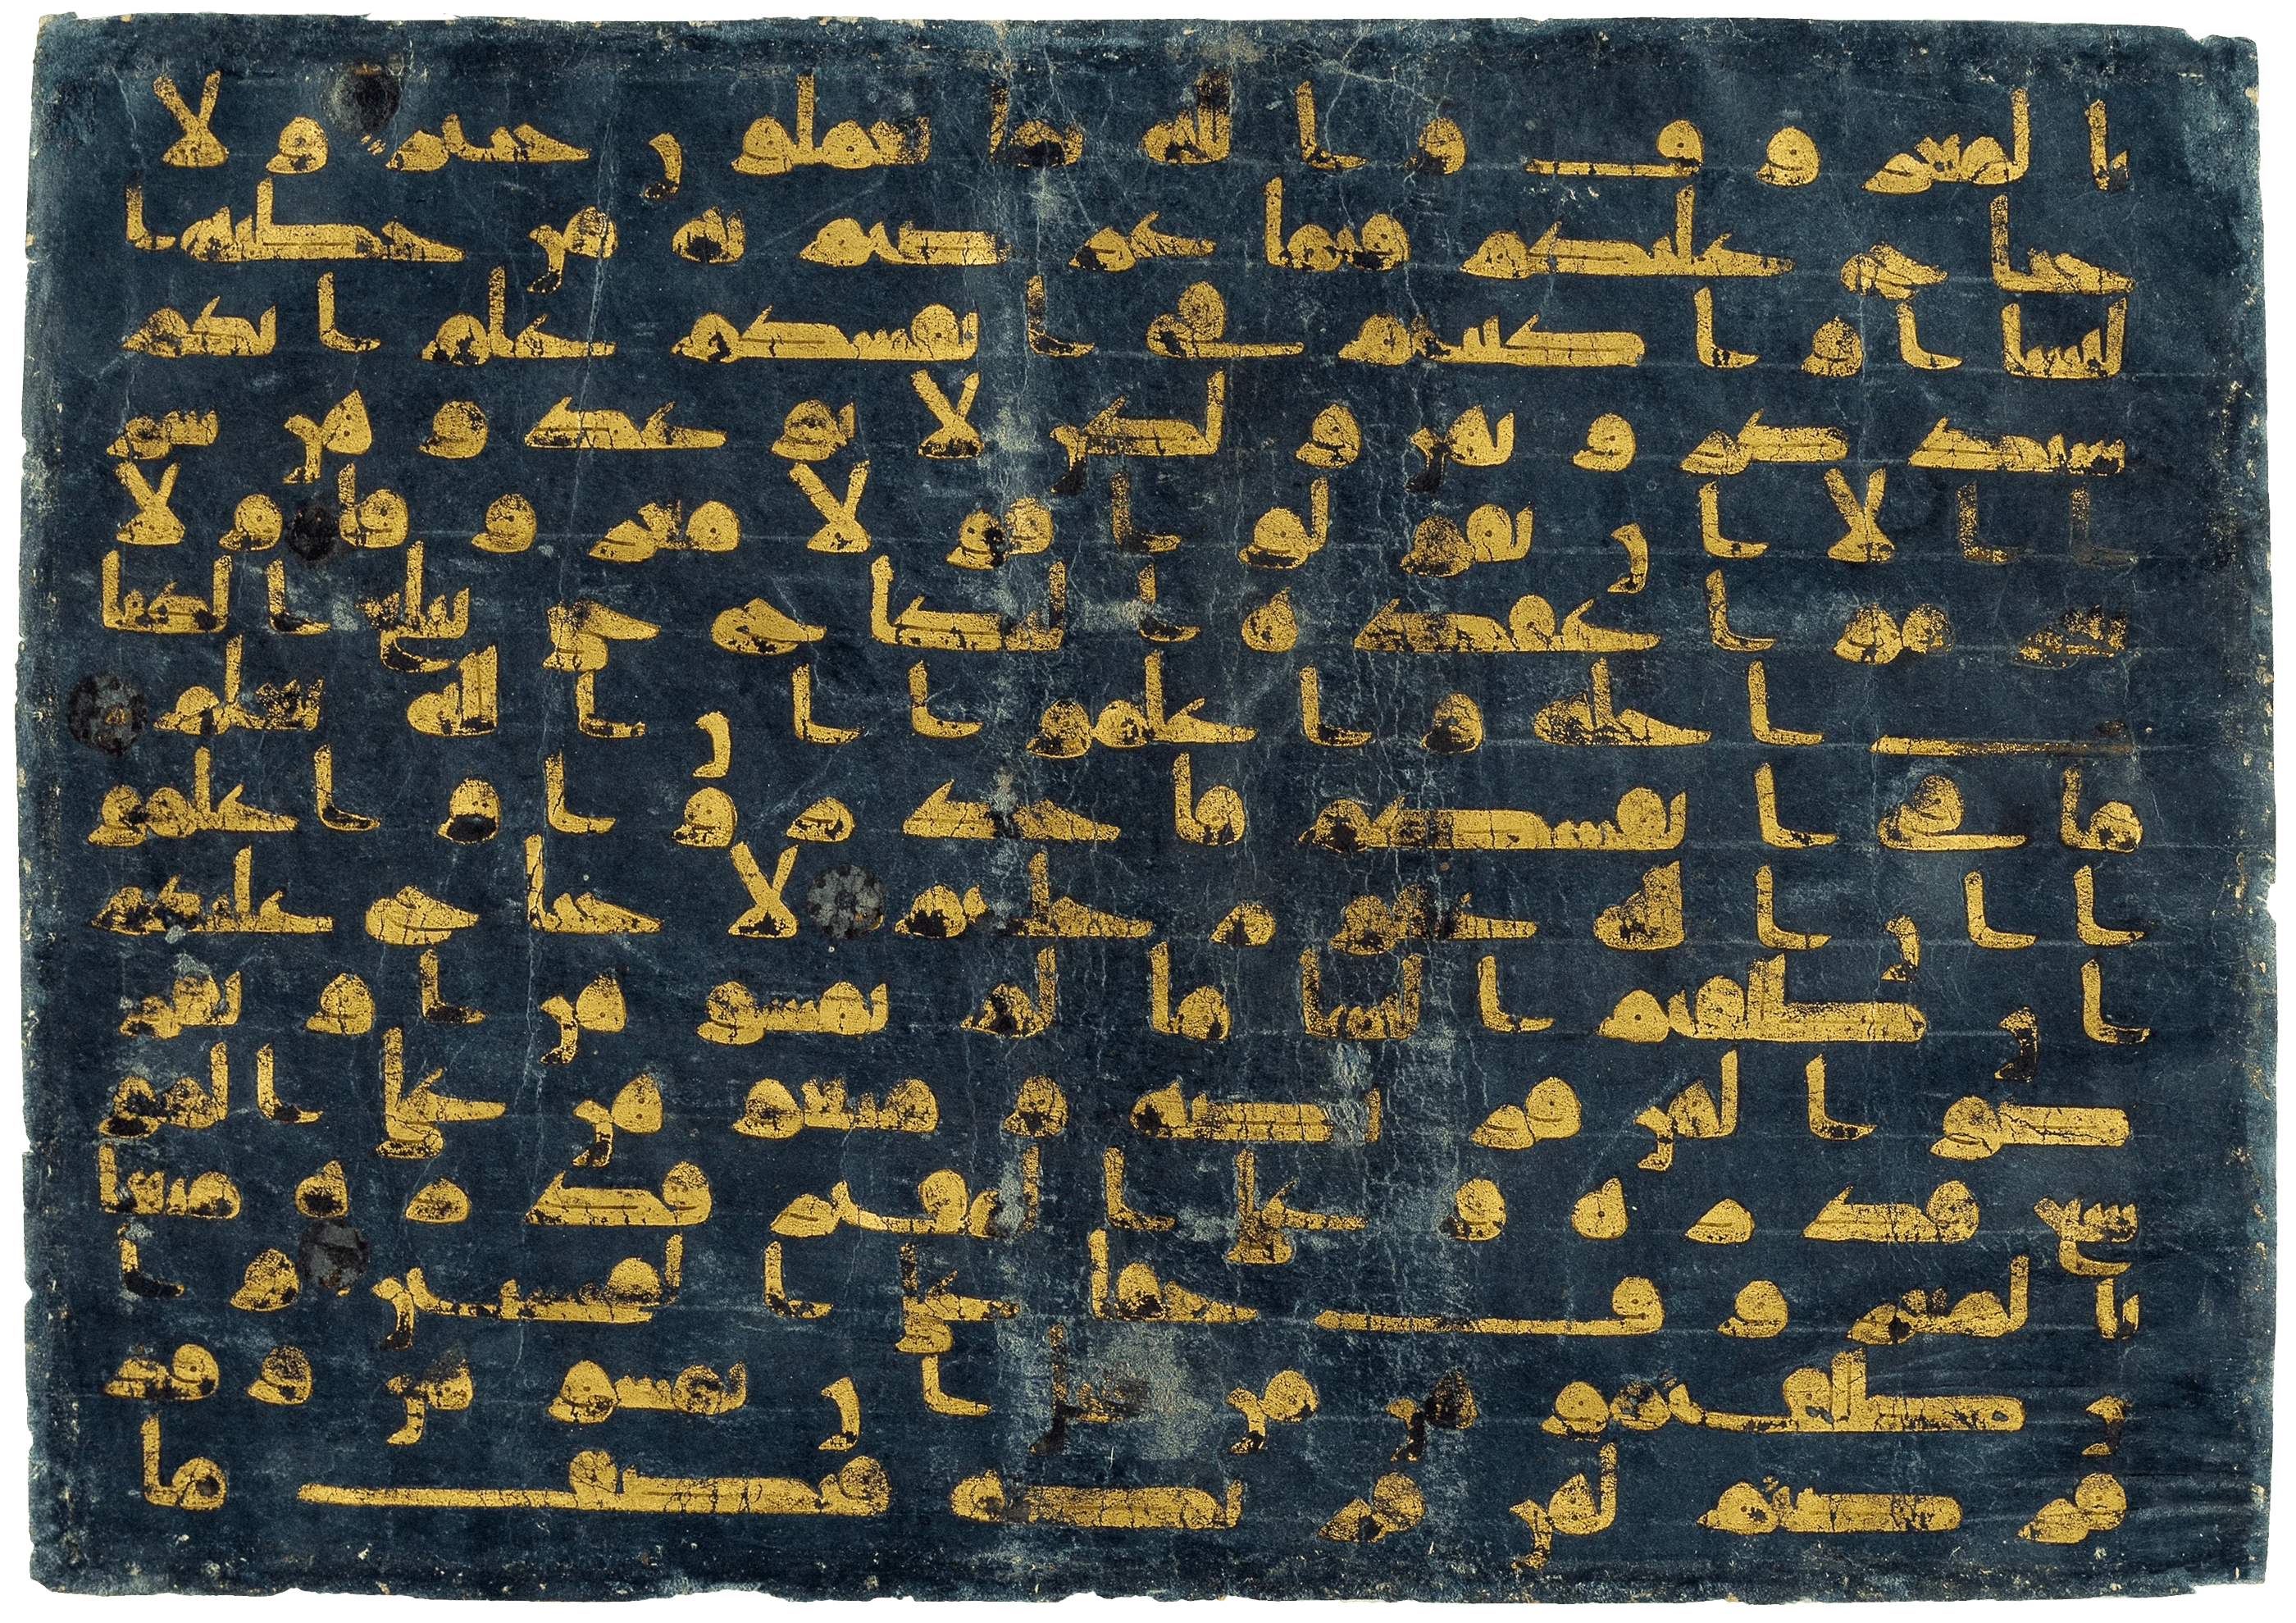 Qur'an leaf in Kufic script, Islamic Dynastic Art